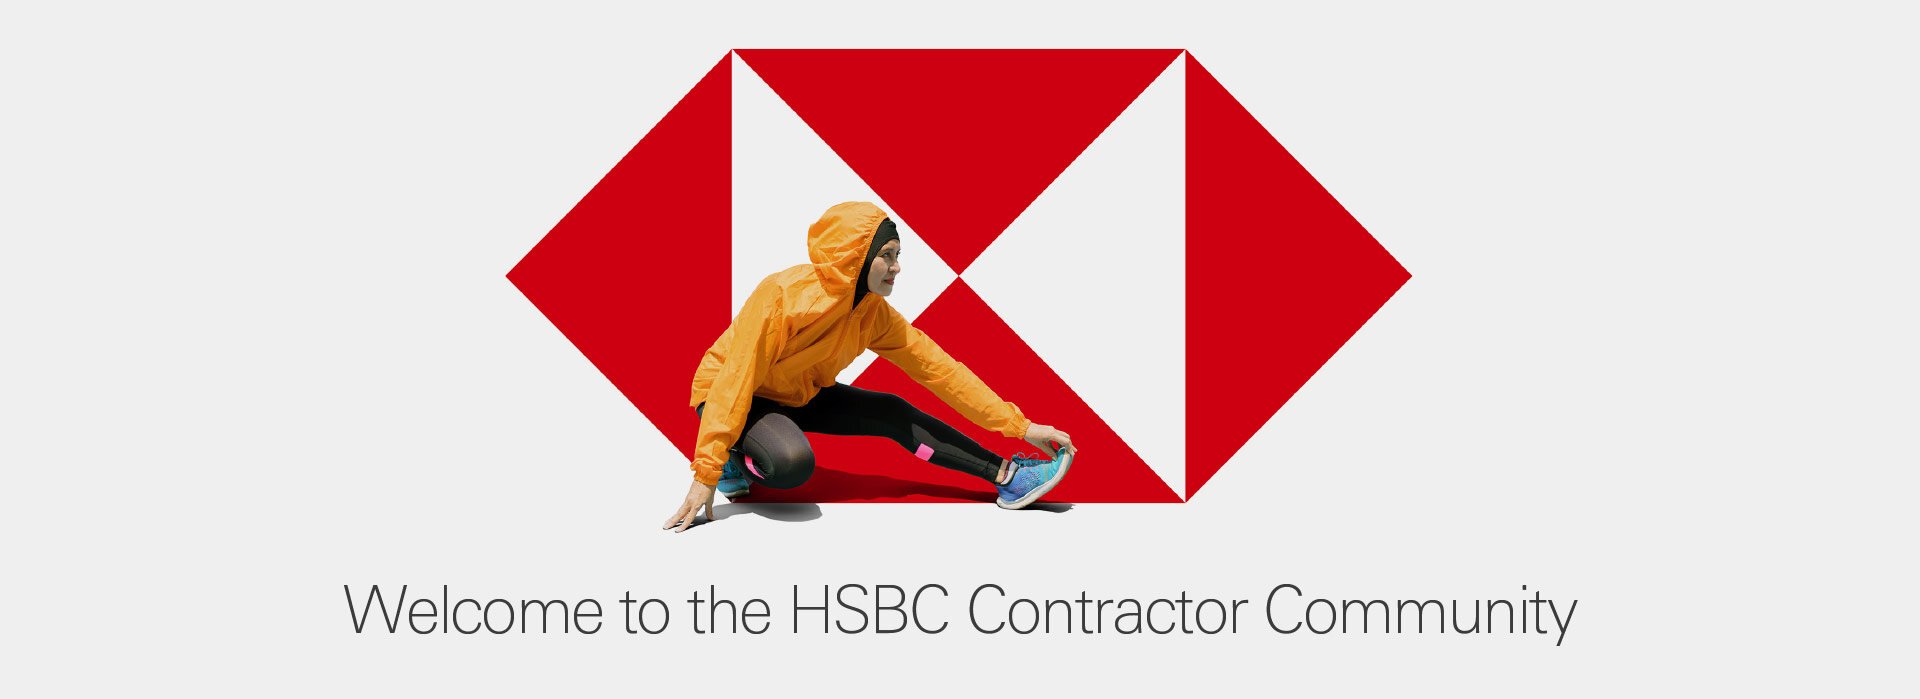 HSBC contractor community 